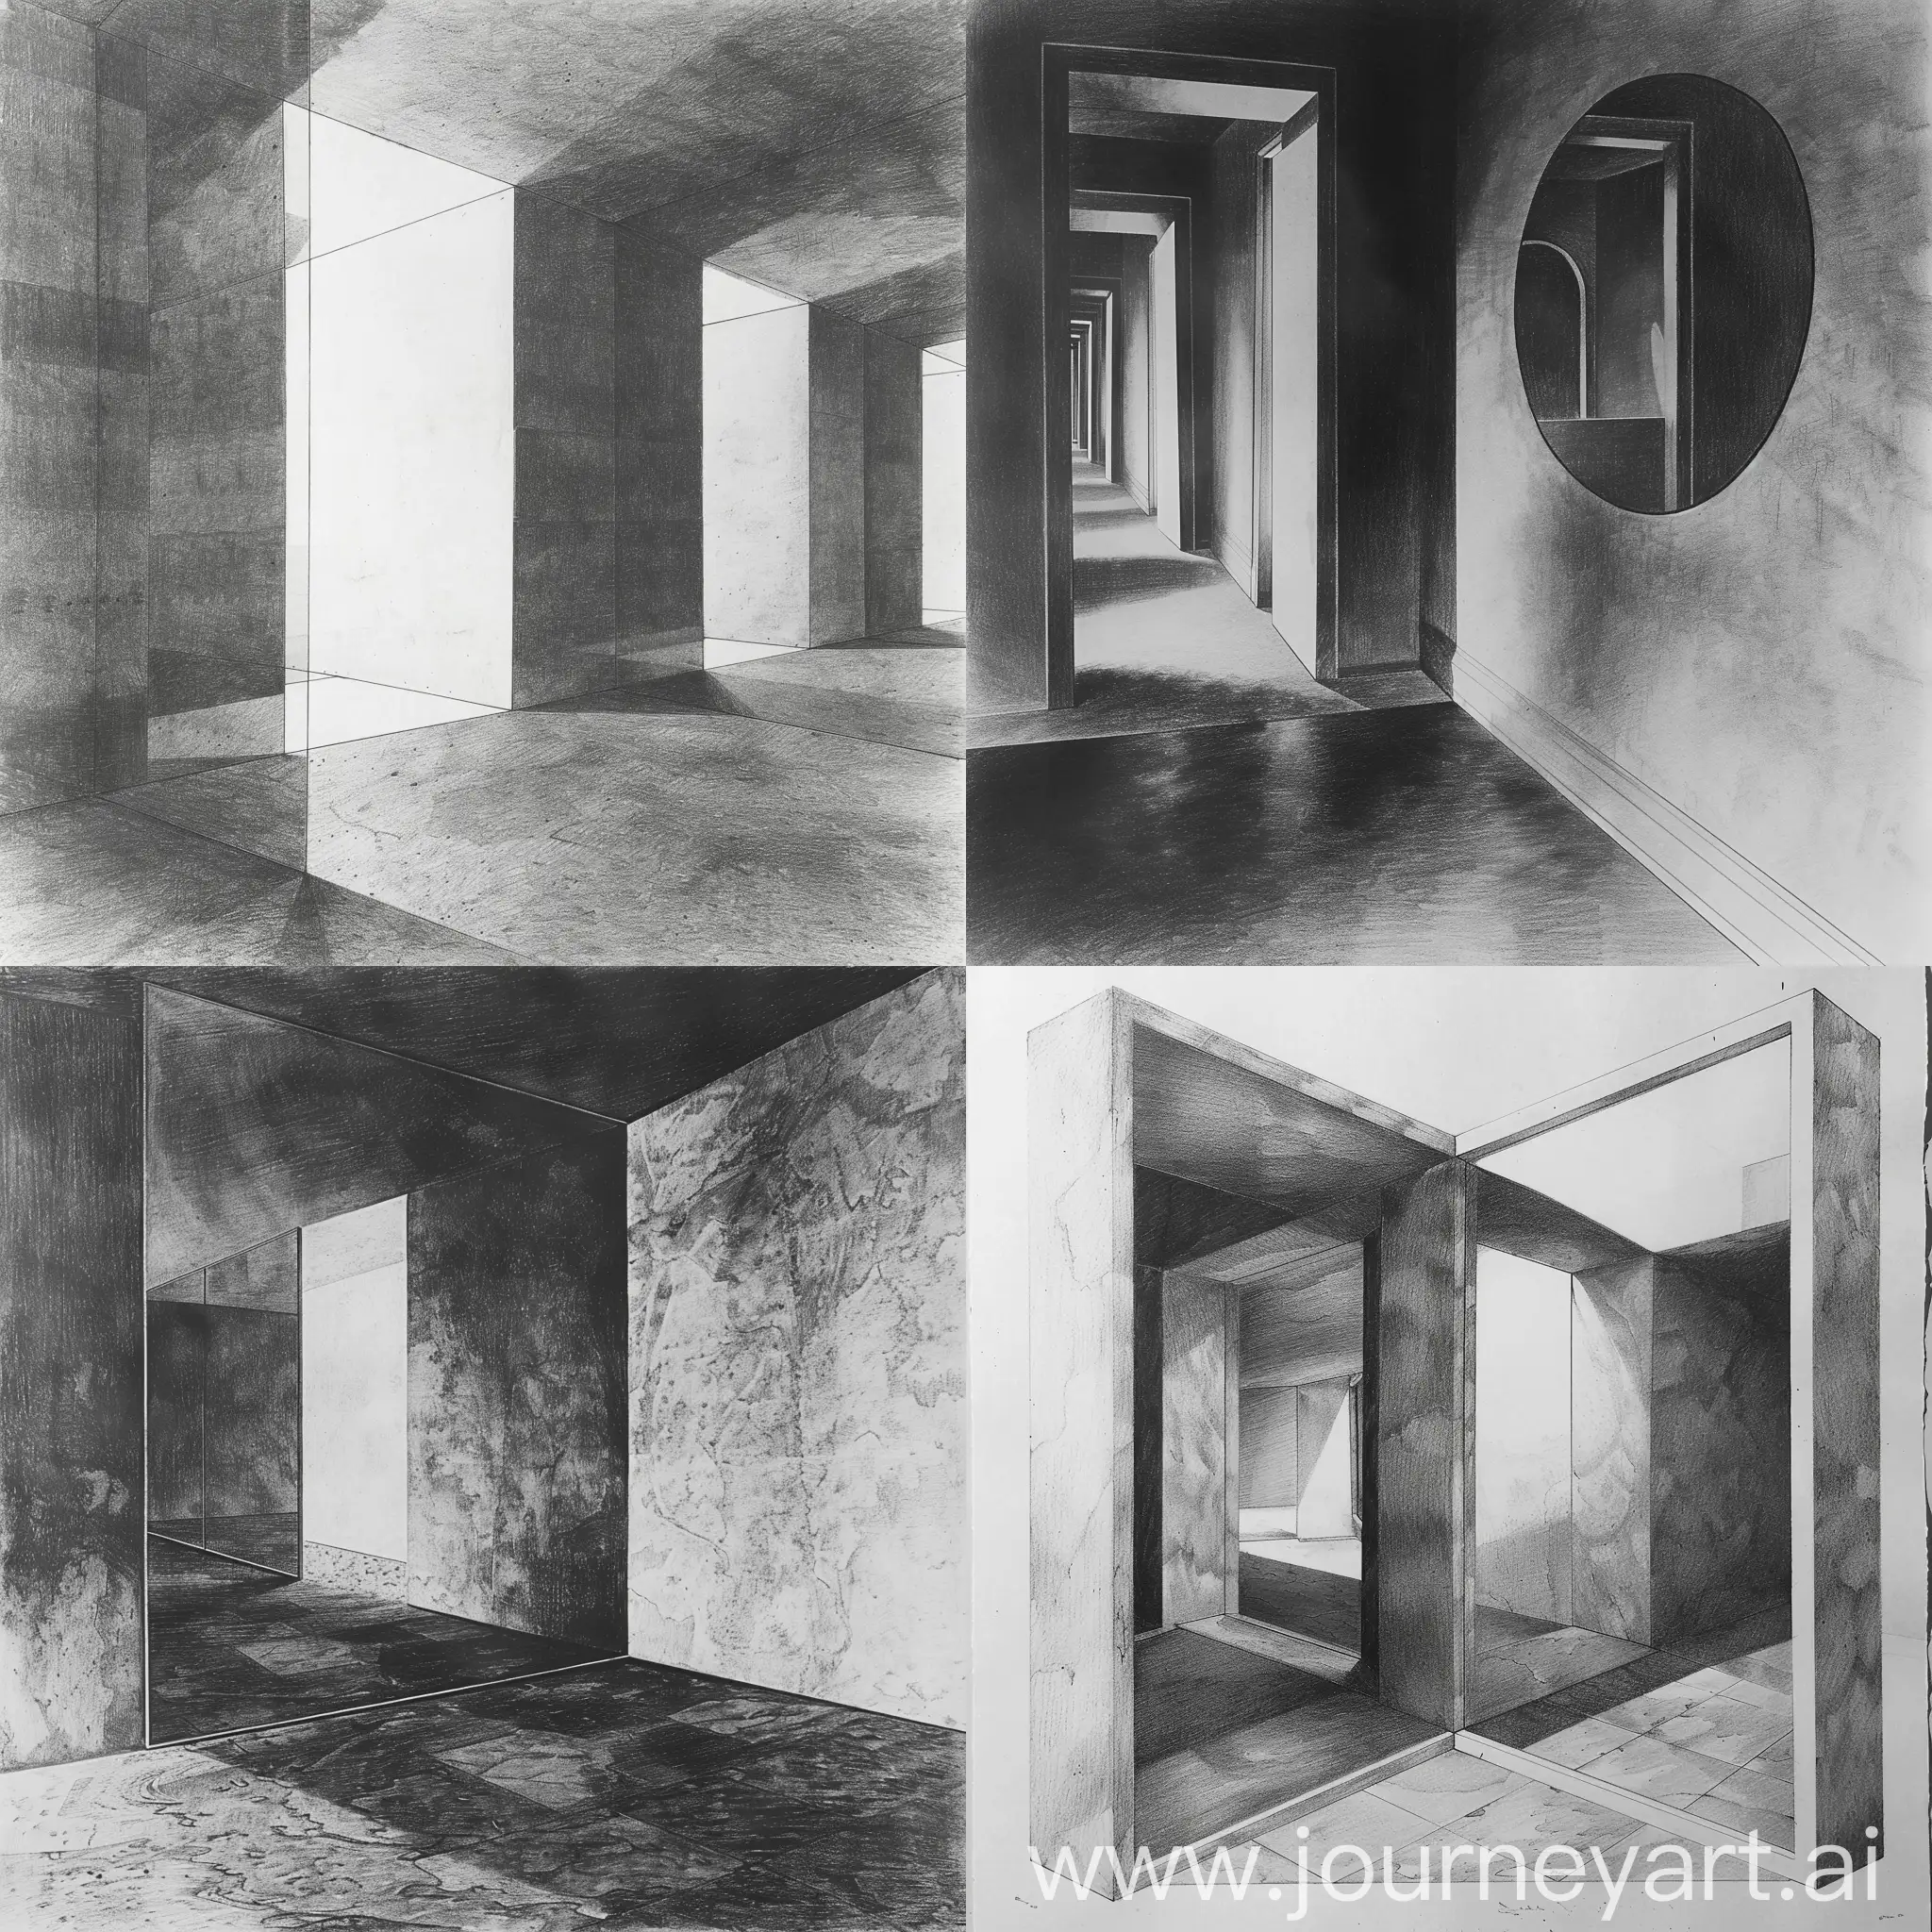 Monochrome-Pencil-Sketch-Surreal-Museum-Reflections